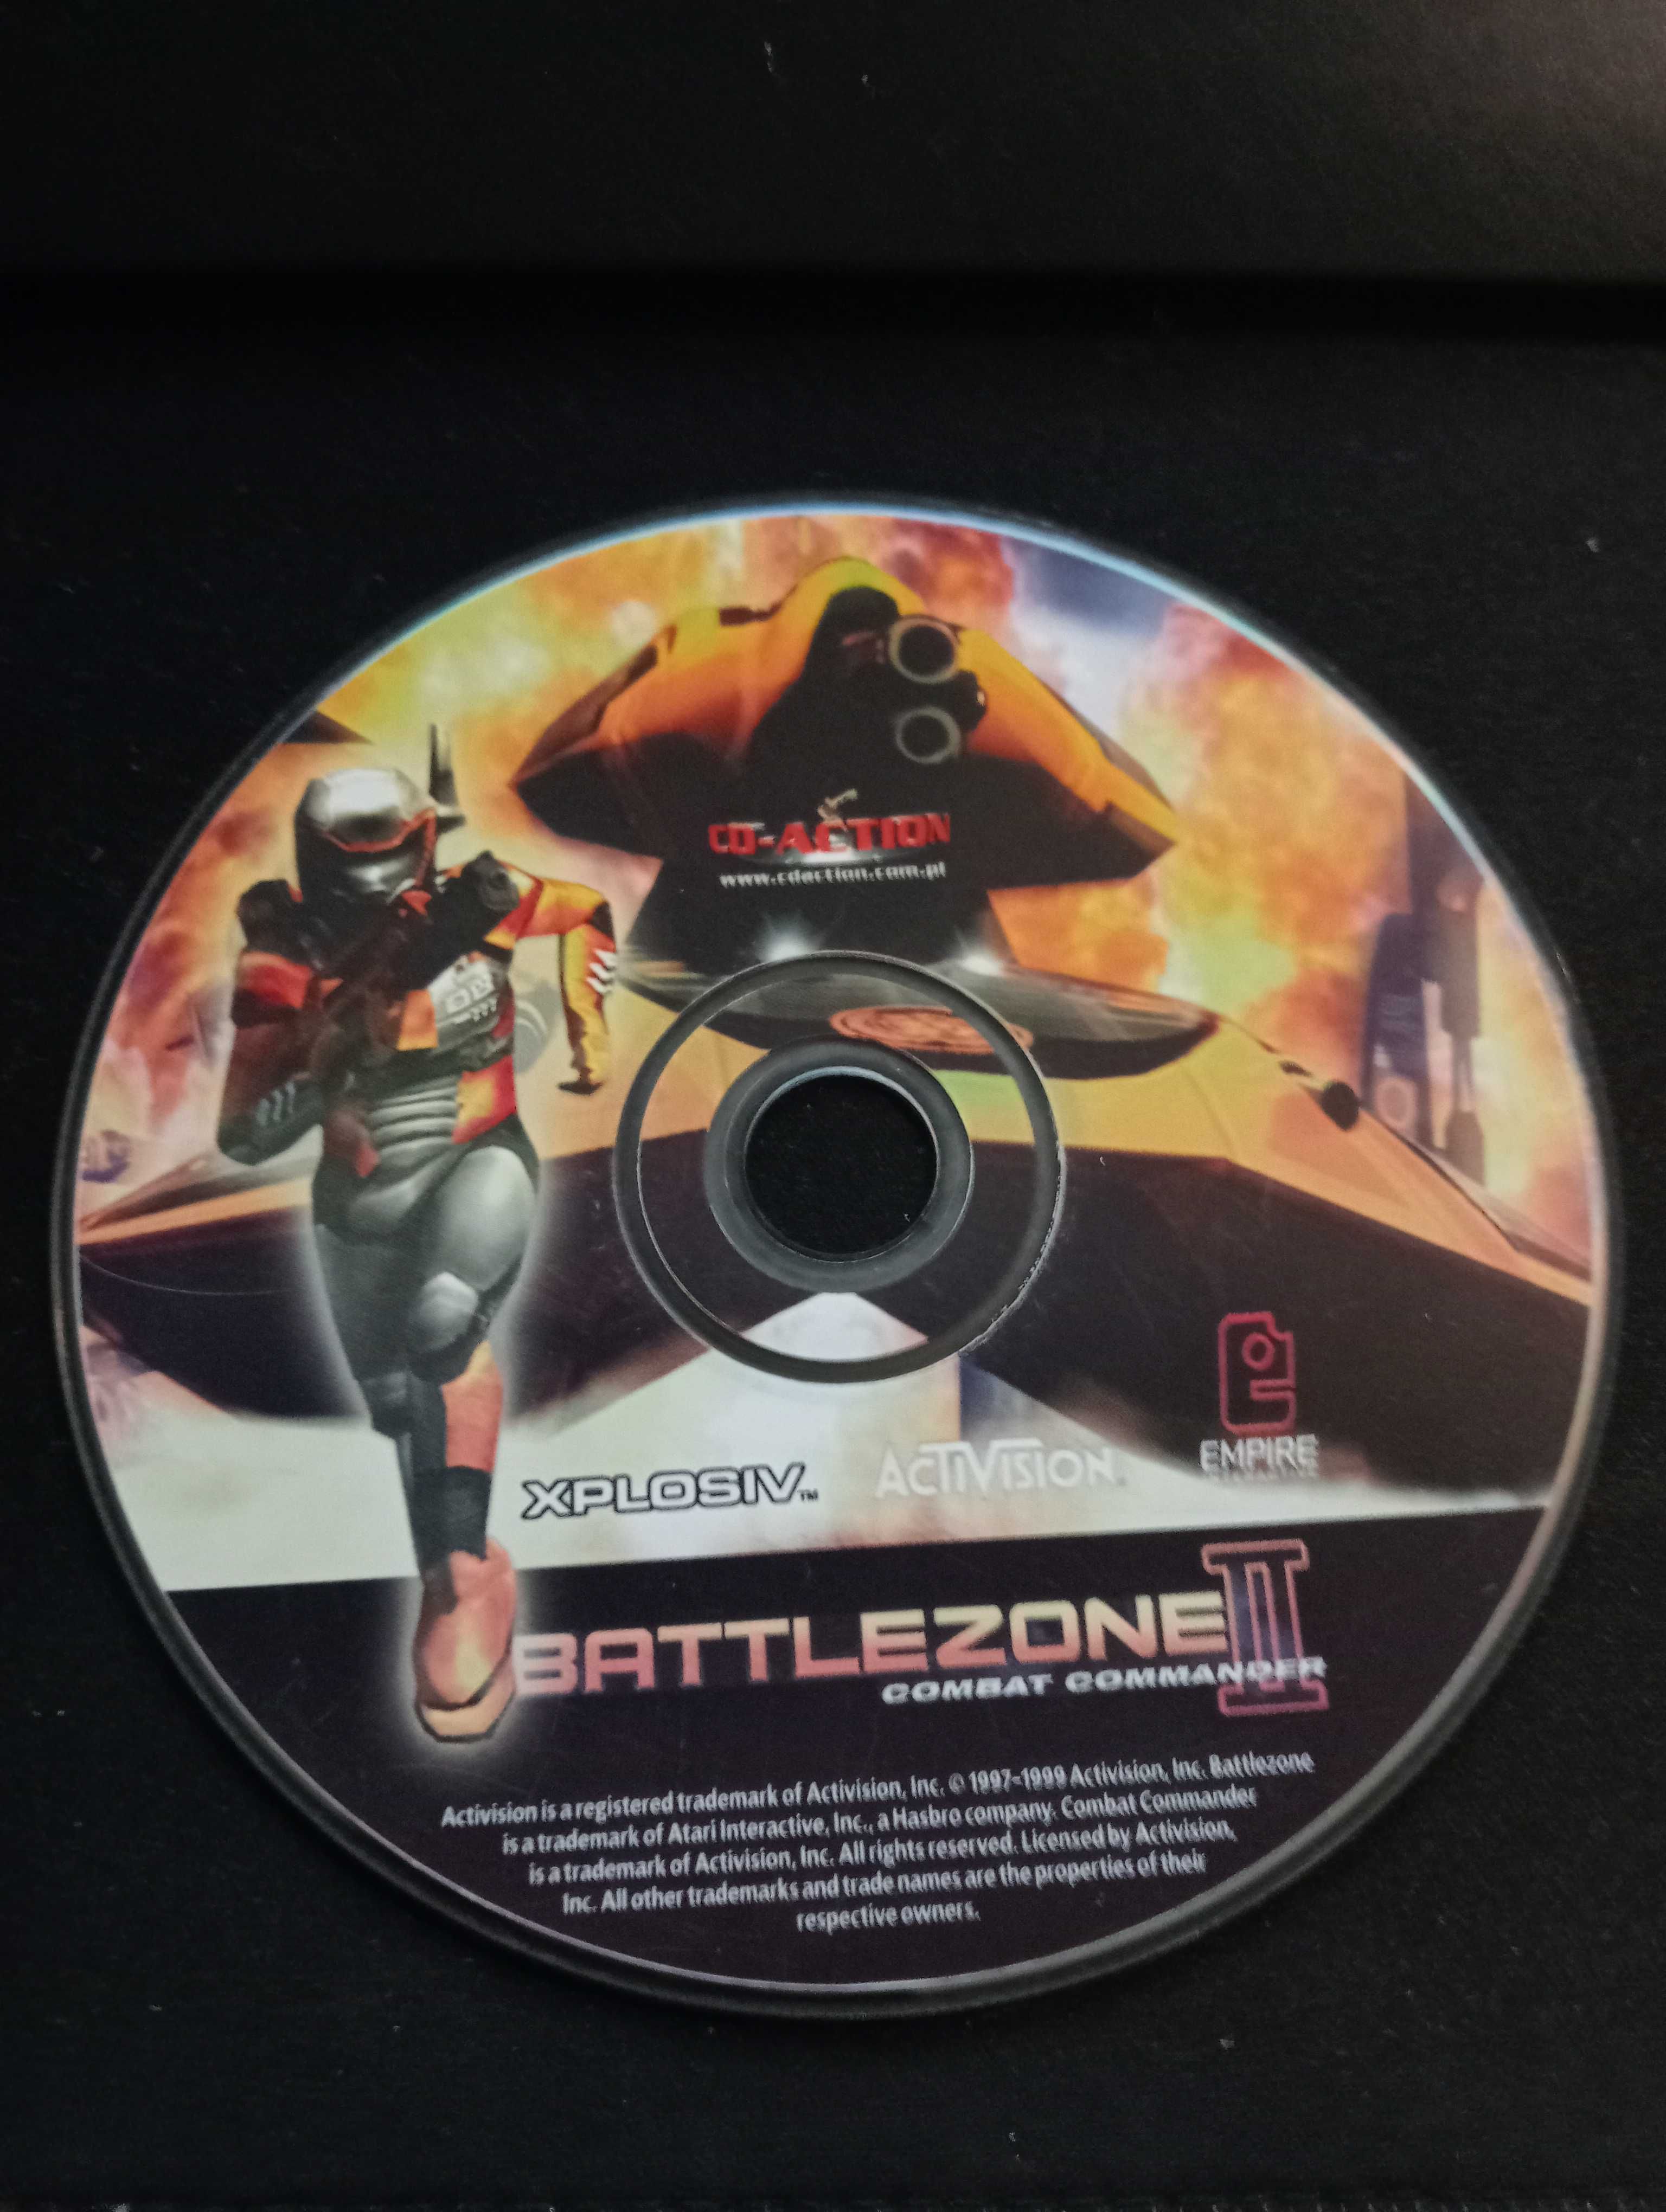 Battlezone 2 - Combat Commander PC